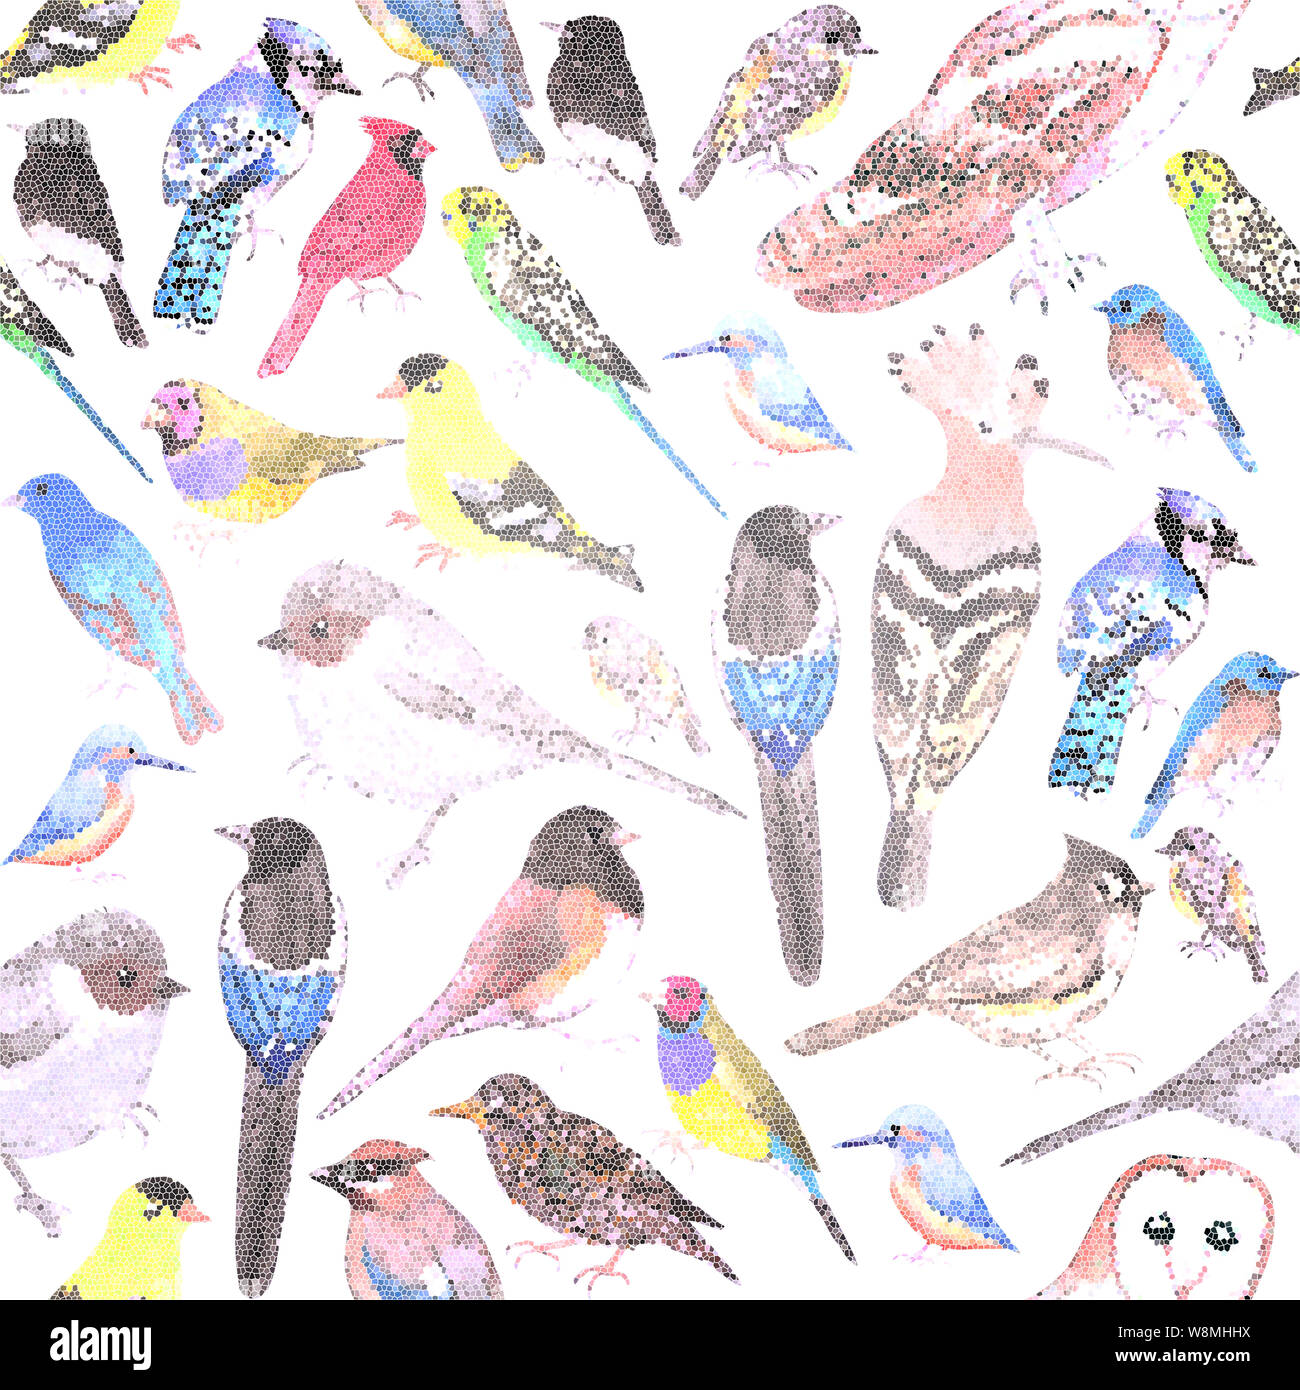 Birds of America- pets and wild birds seamless mosaic background Stock Photo